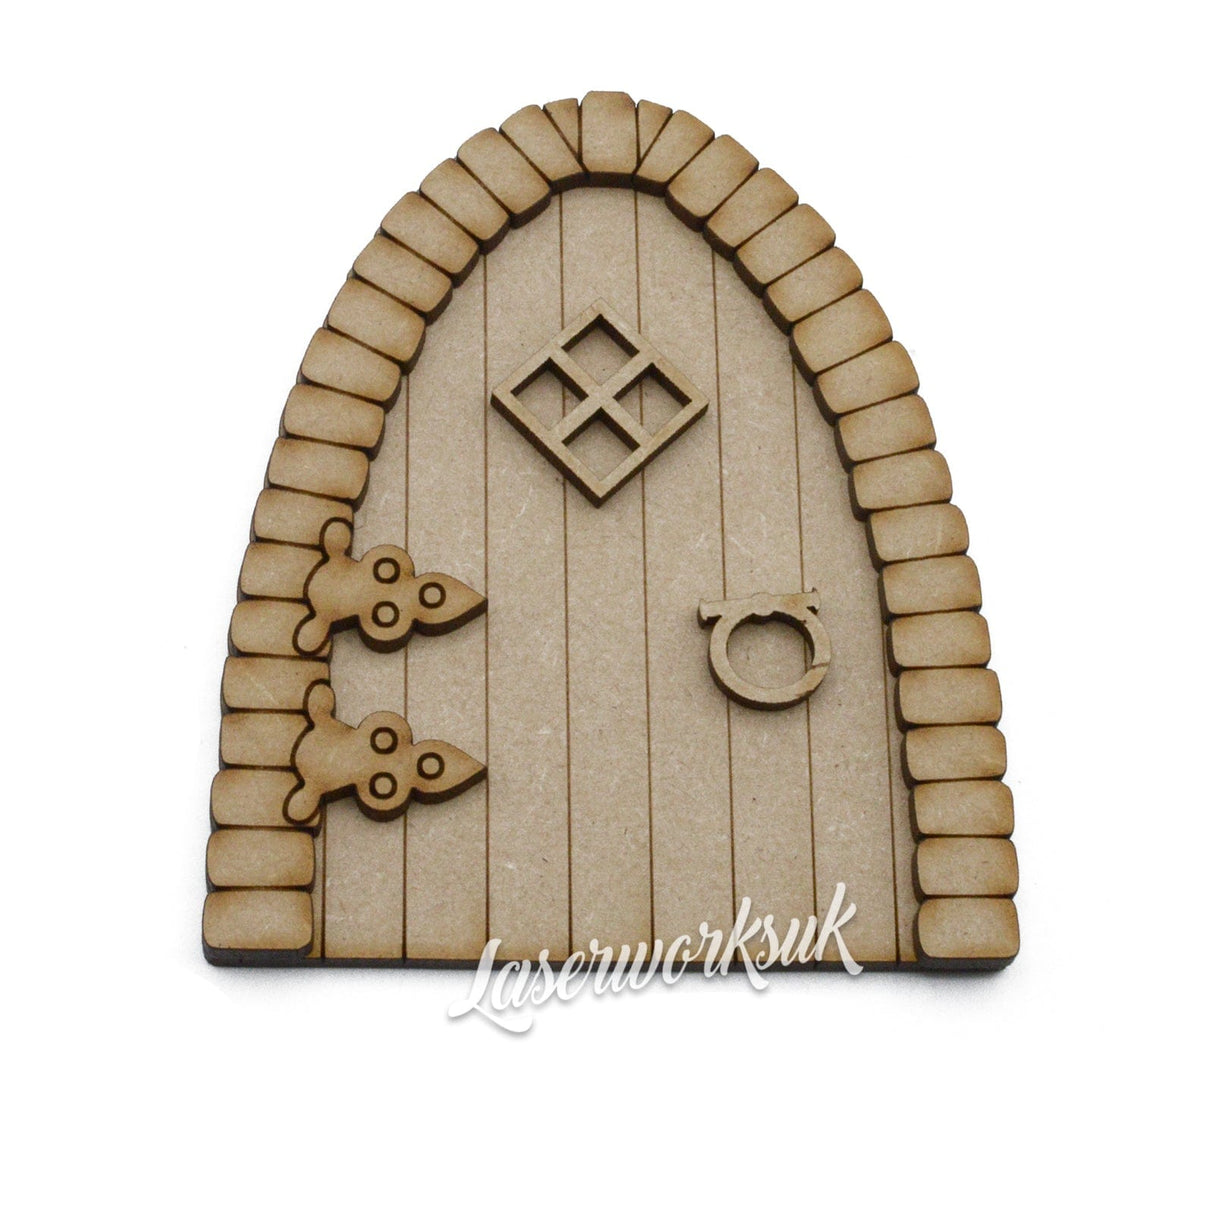 Fairy Doors Craft Shapes - Fairytale Crafts - Laserworksuk